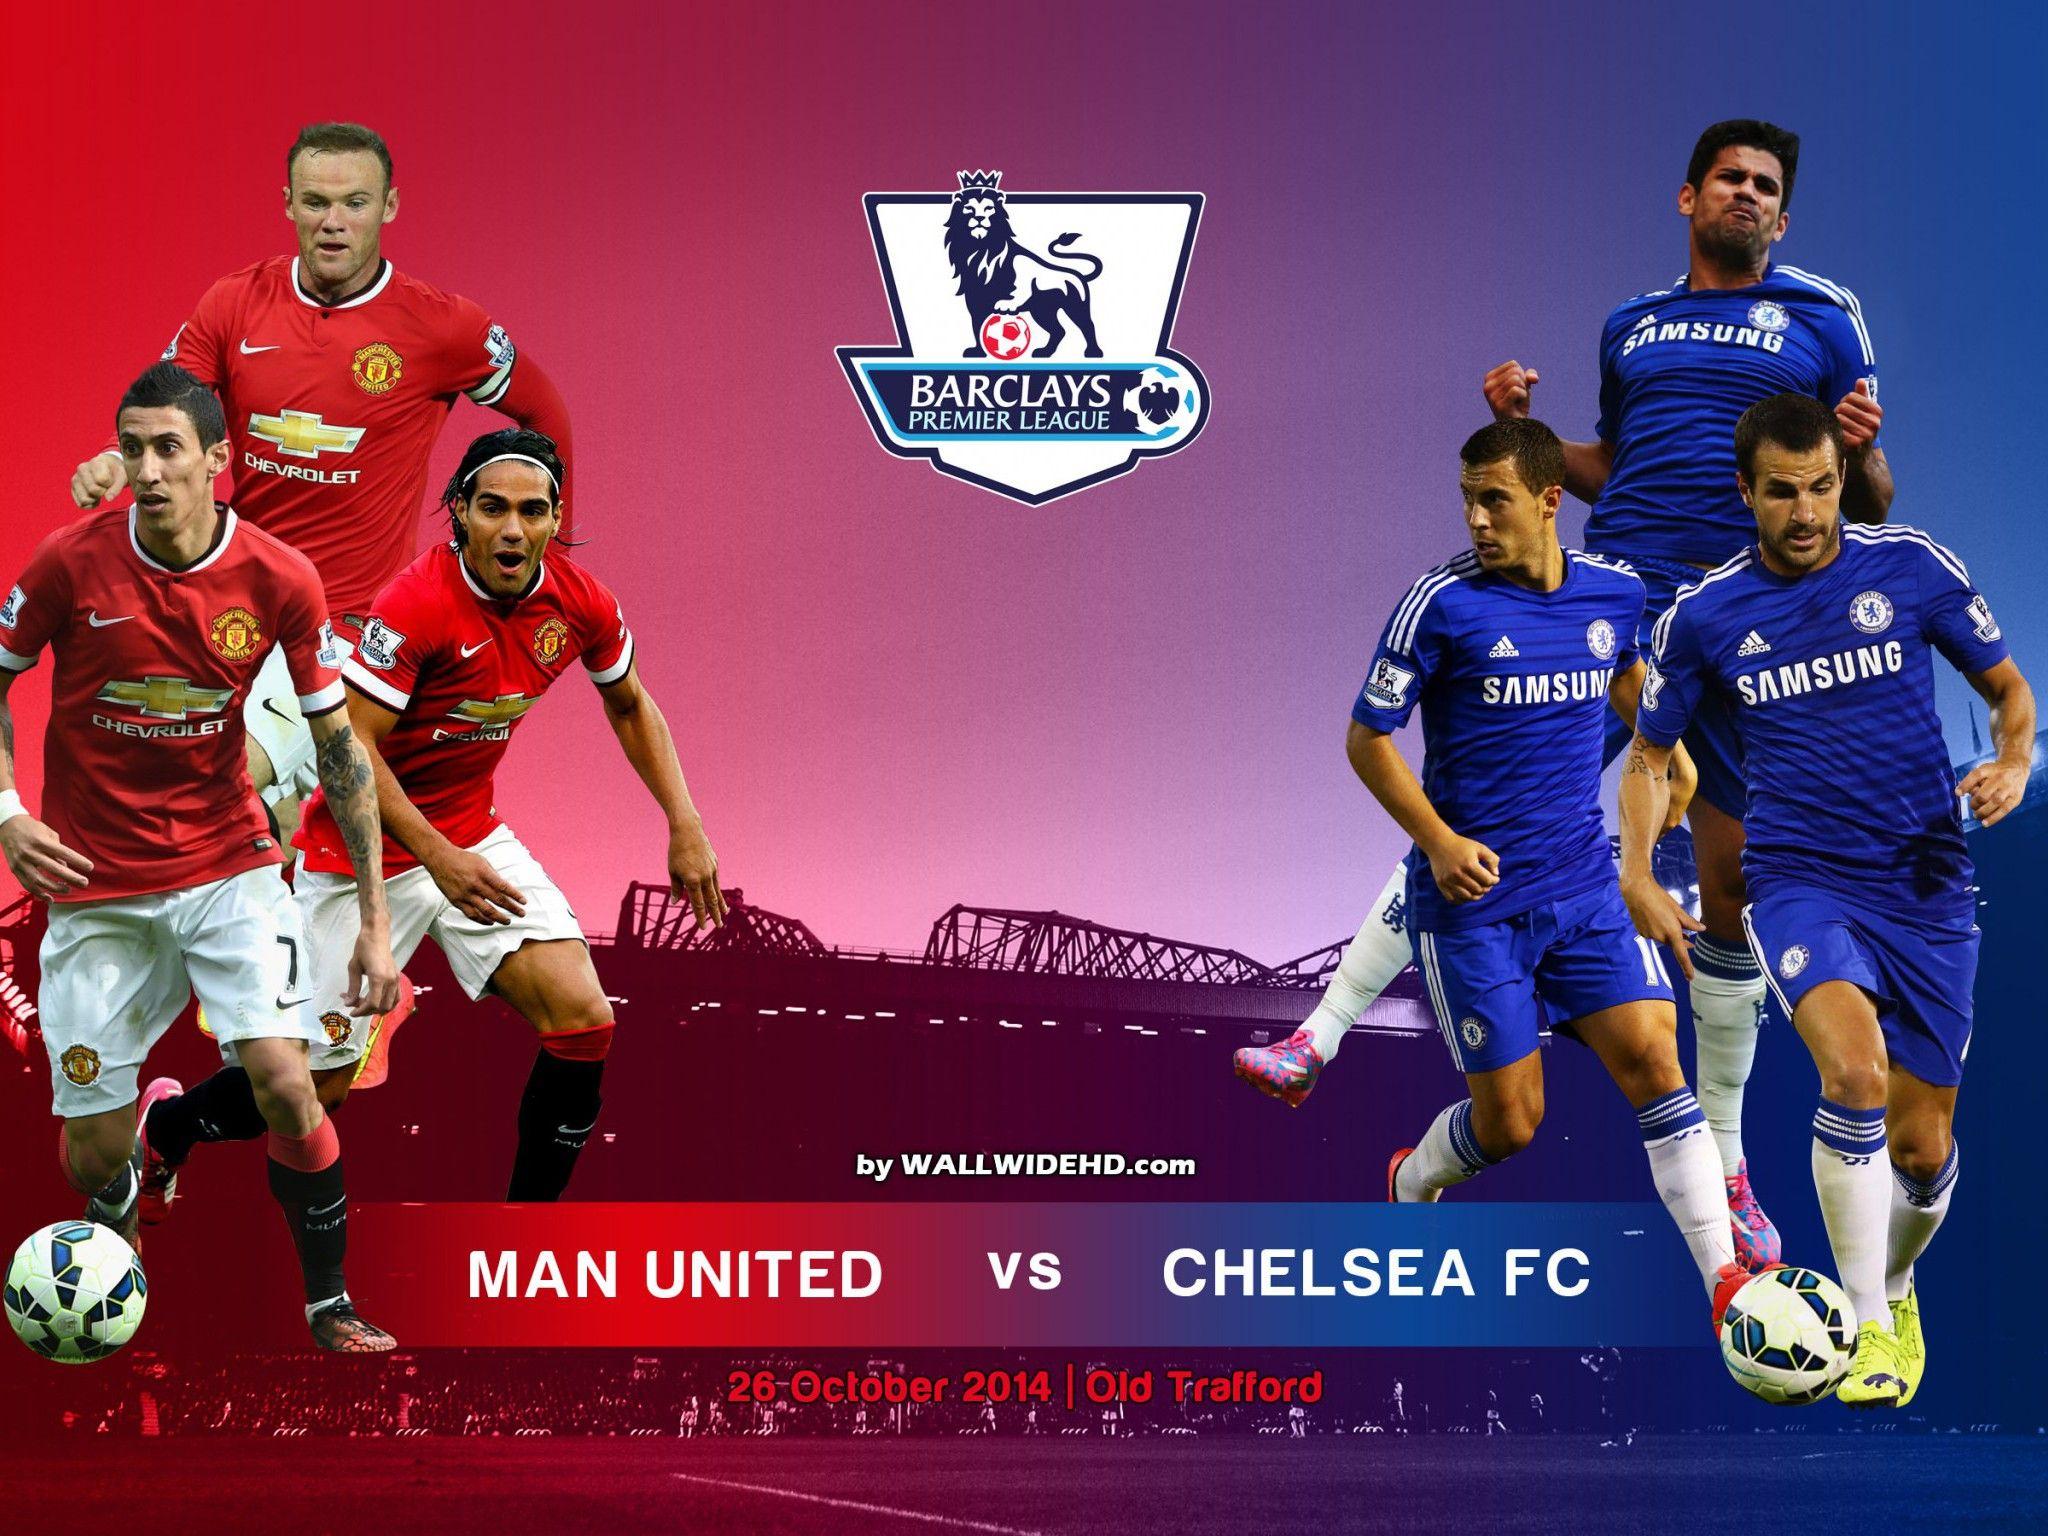 Download 2048x1536 Manchester United Vs Chelsea FC 2014 2015 Premier